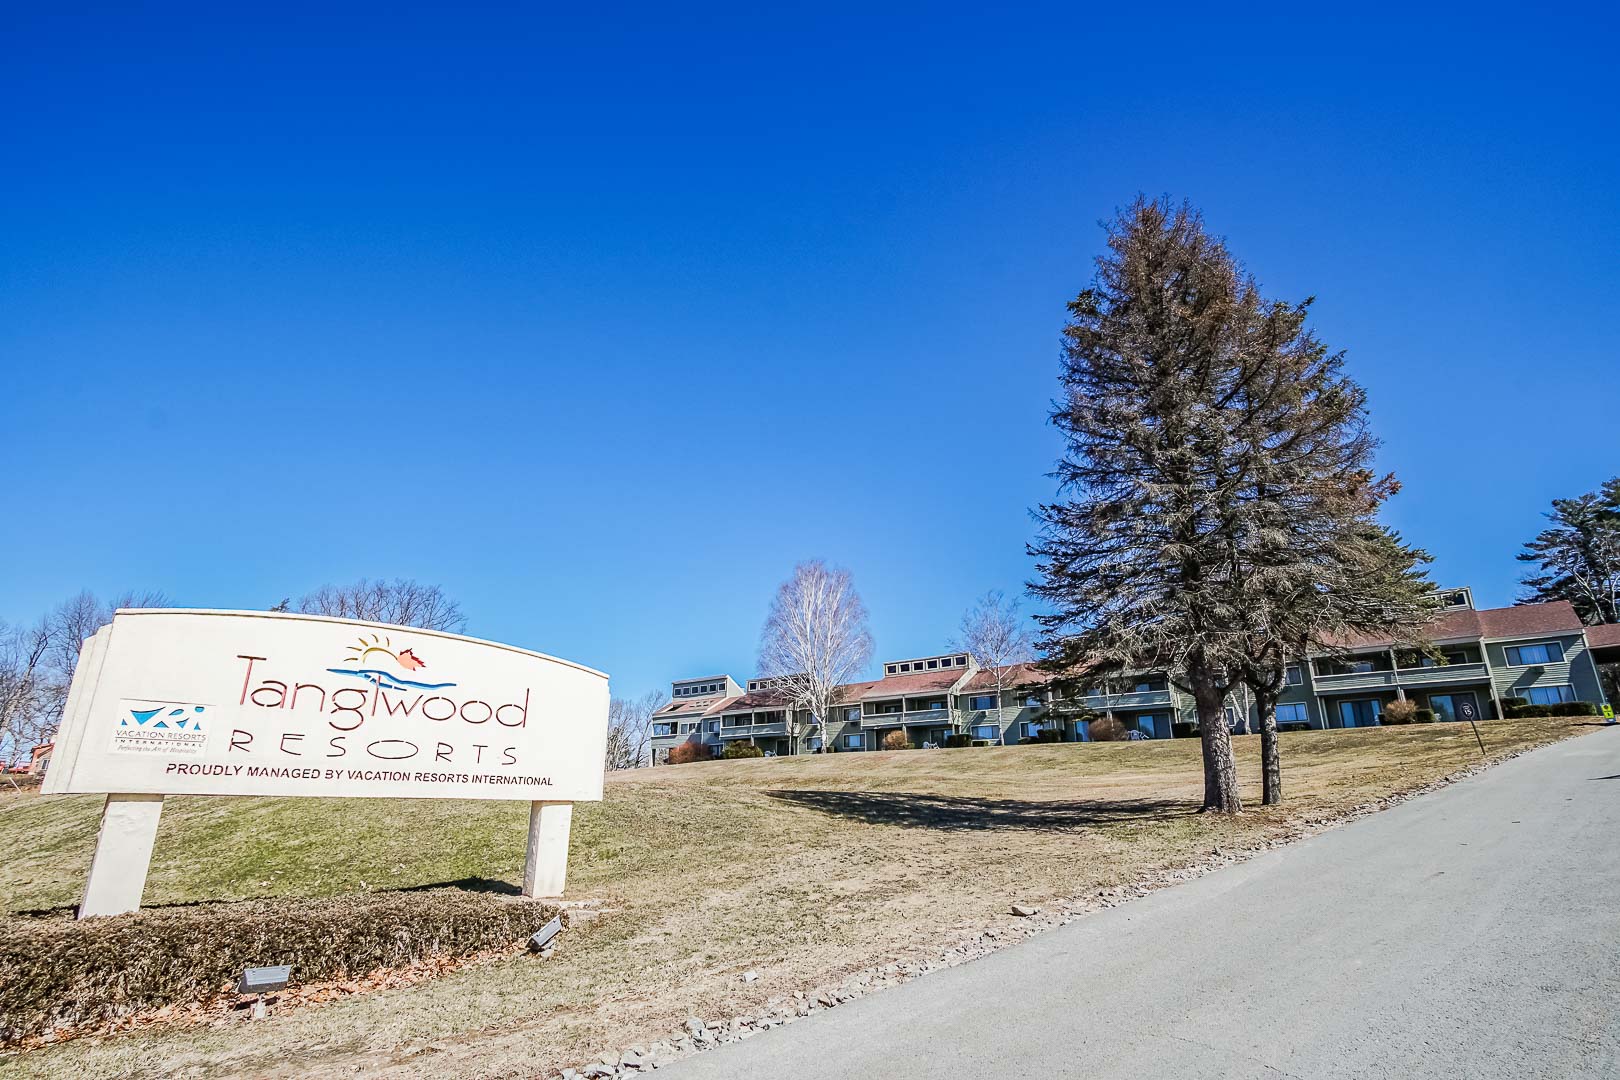 A welcoming resort entrance at VRI's Tanglwood Resort in Pennsylvania.